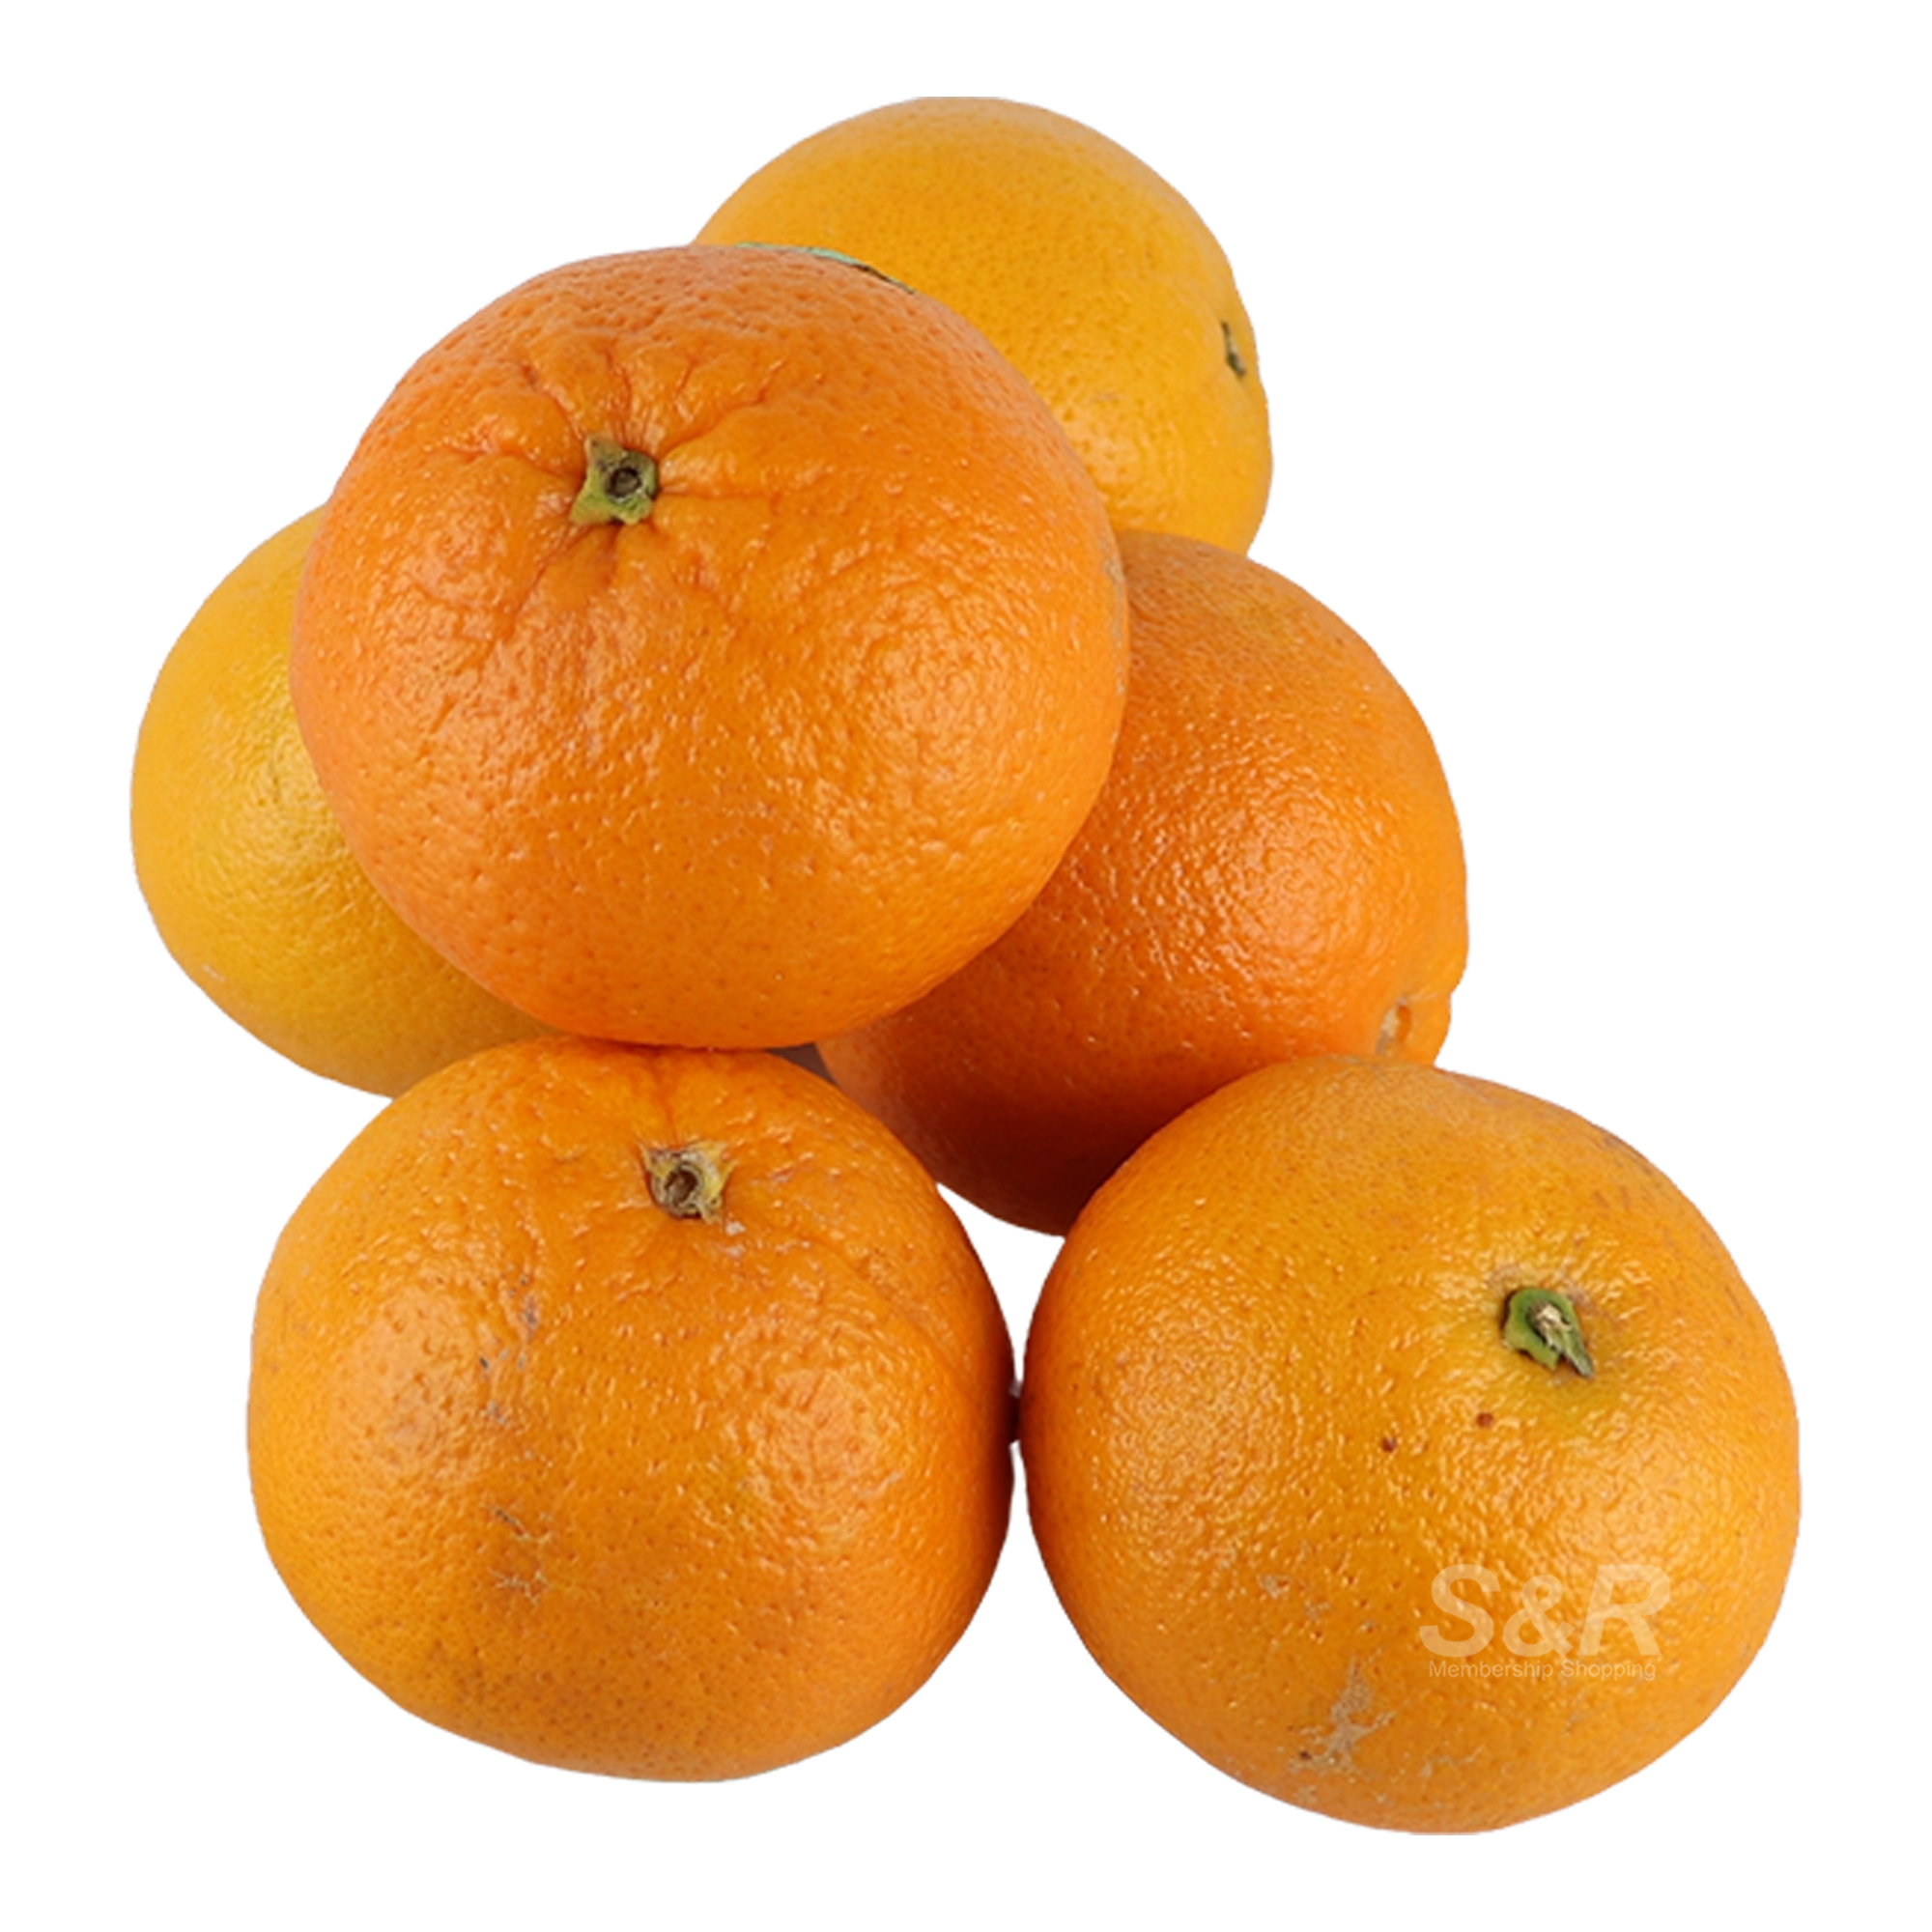 S&R Australian Valencia Orange 6 pcs